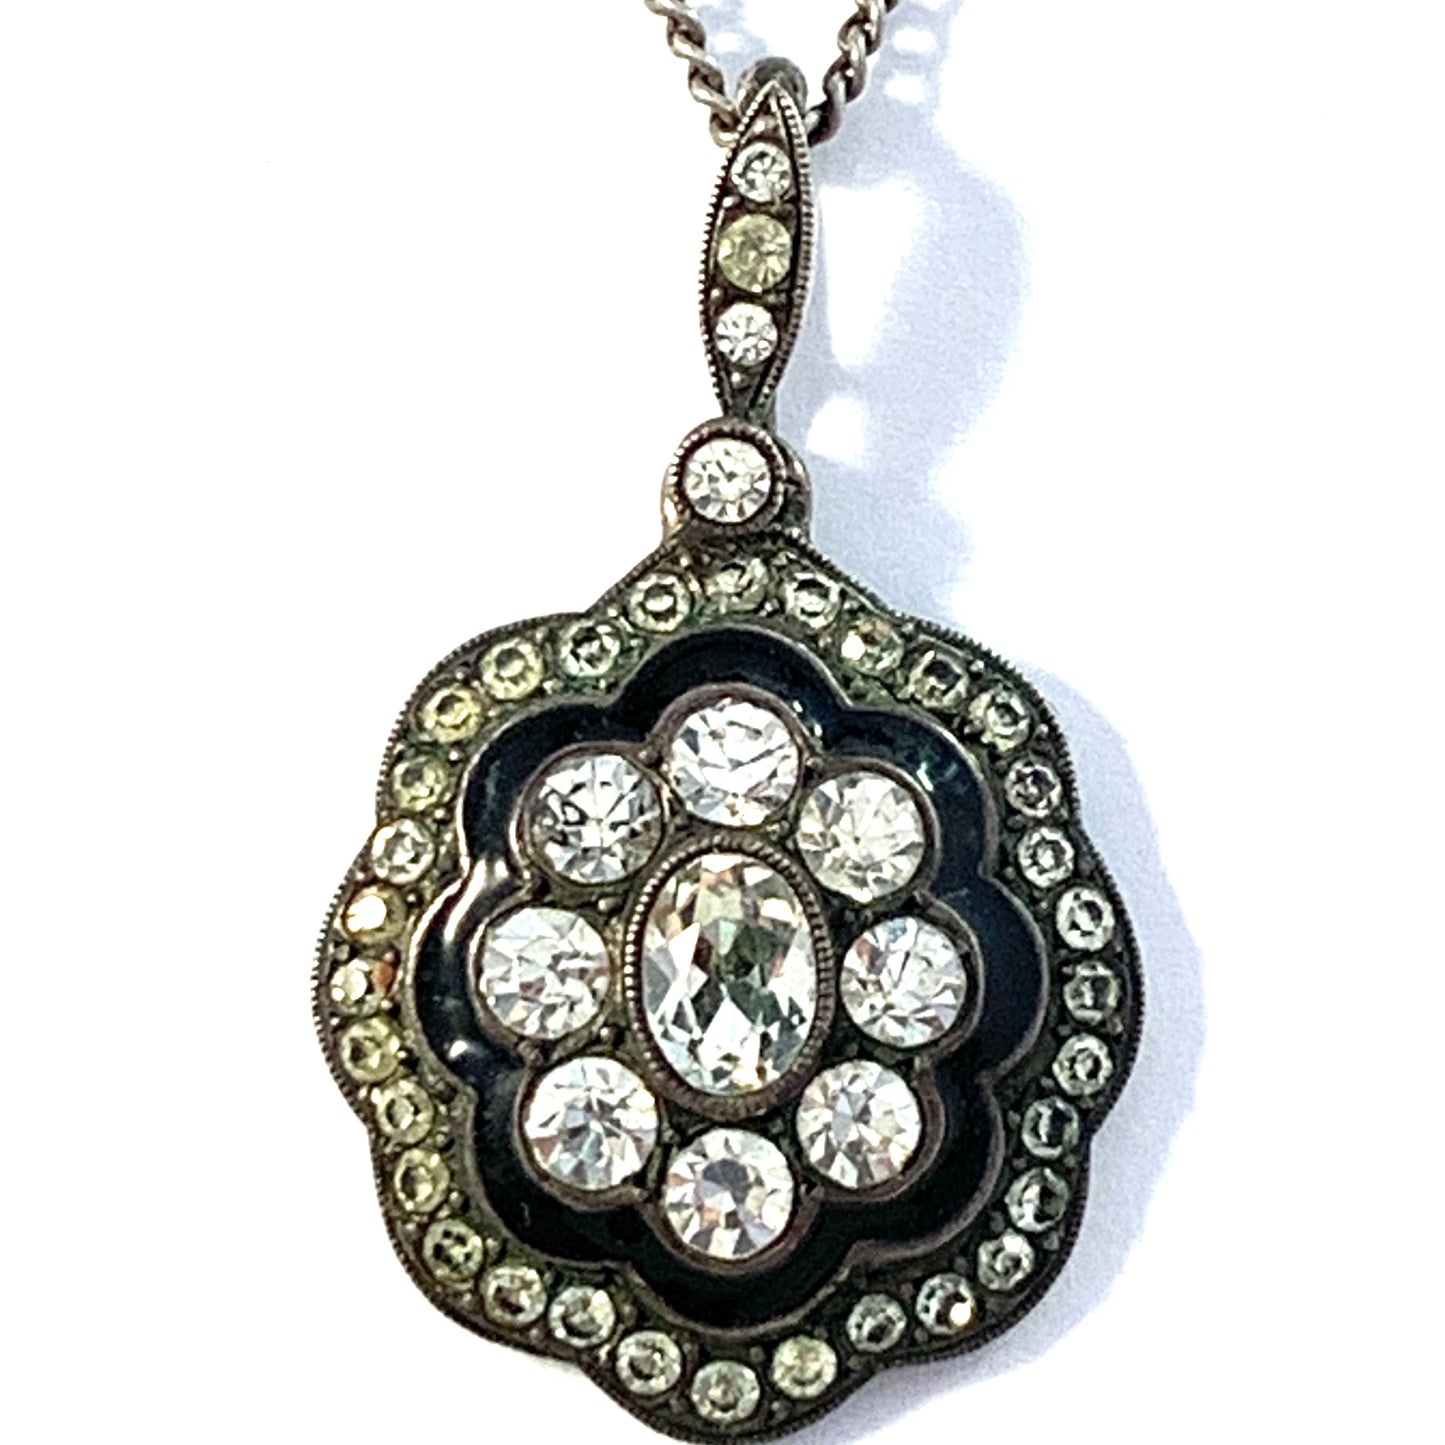 Bremer Silberwarenfabrik, Germany c 1910. Antique Solid Silver Black Enamel Paste Stone Pendant Necklace.